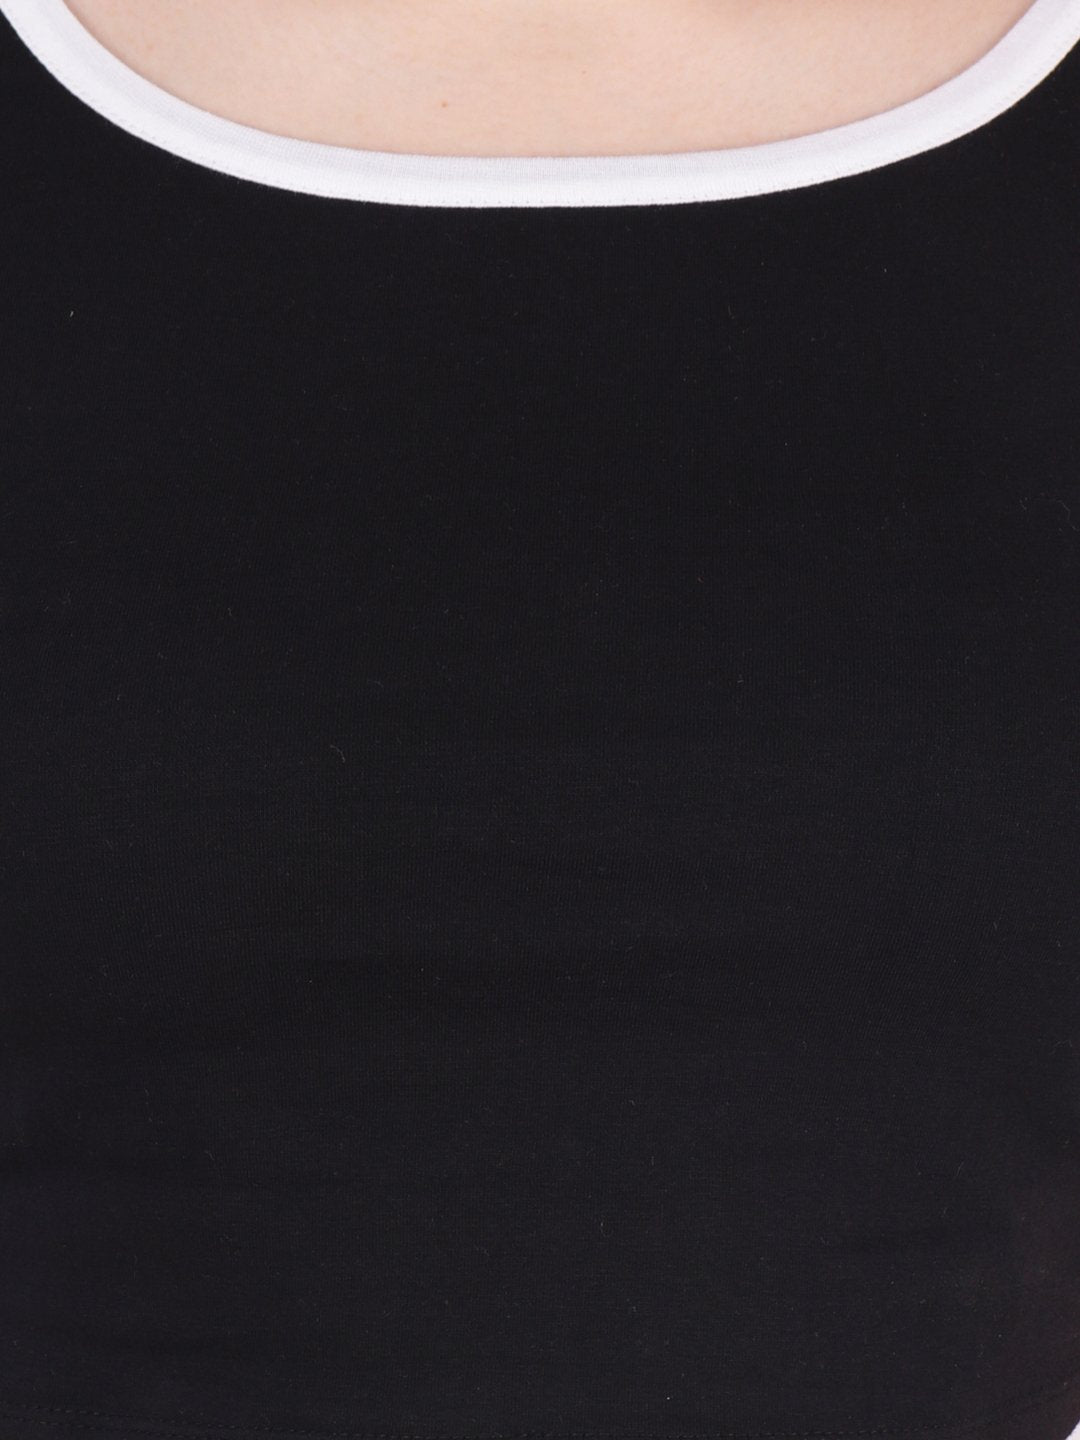 SCORPIUS Black Hosiery Crop top with white borders